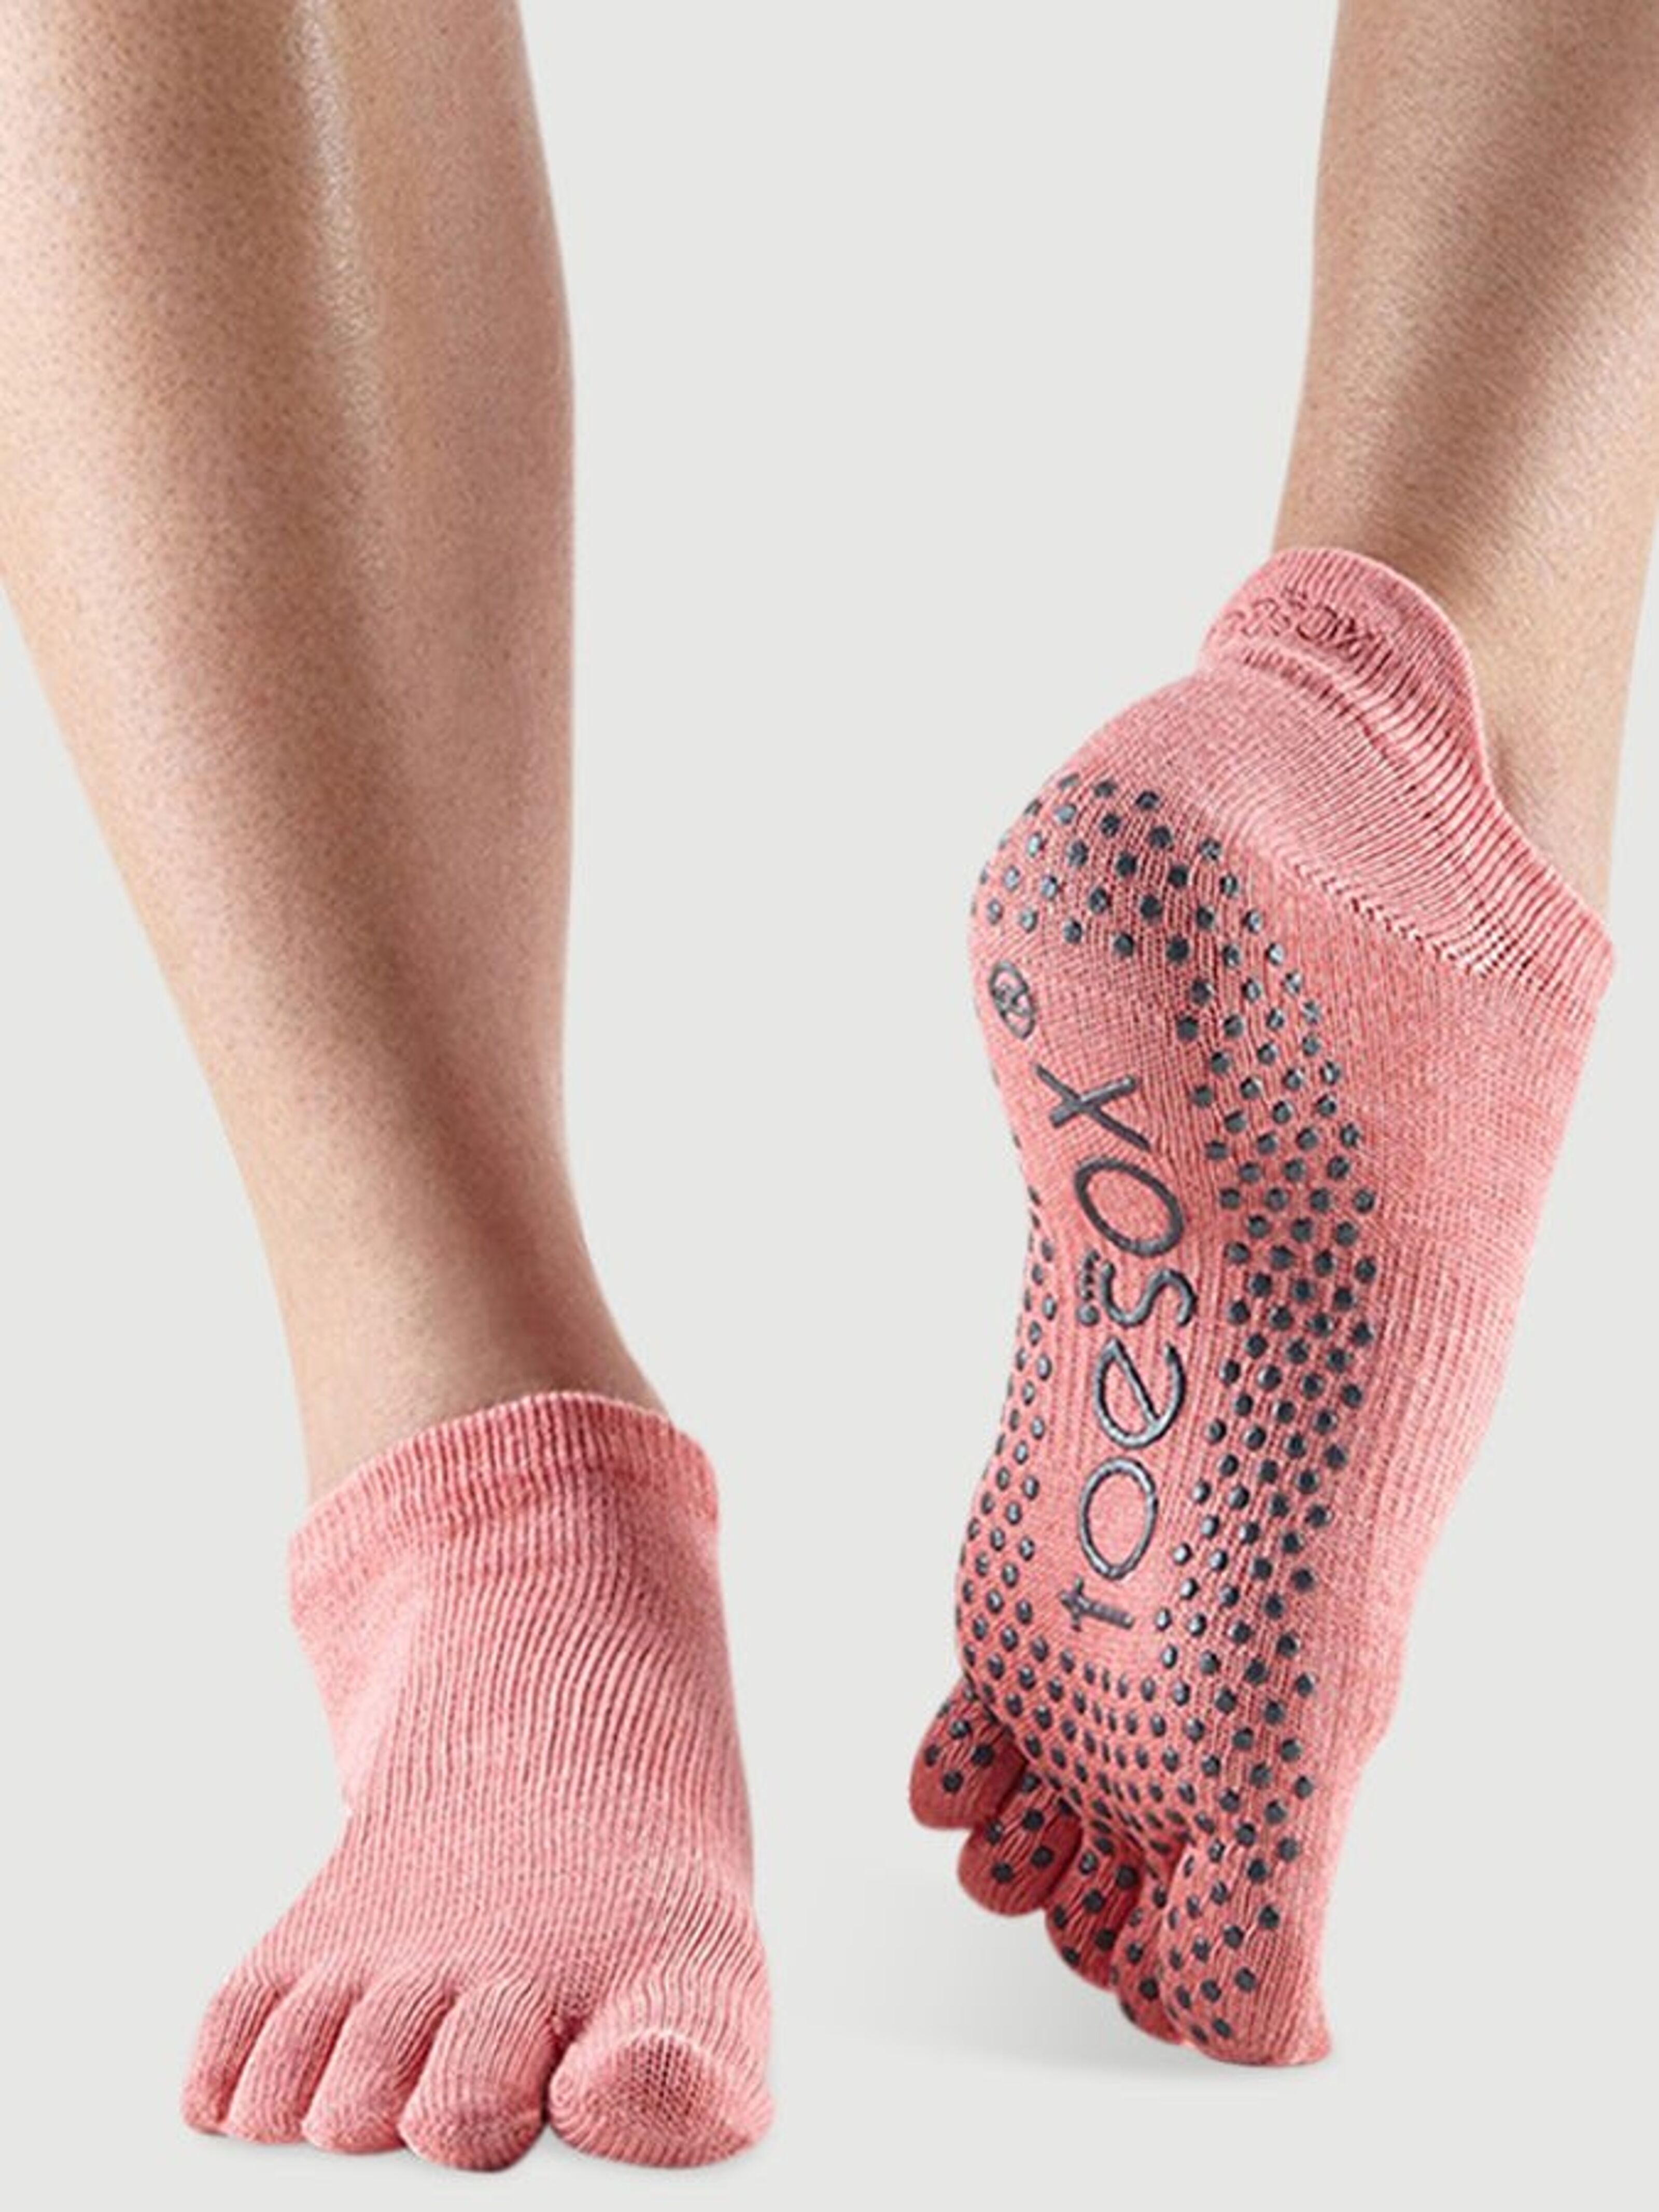 Toesox Full Toe Low Rise Grip Socks For Barre Pilates Yoga Black